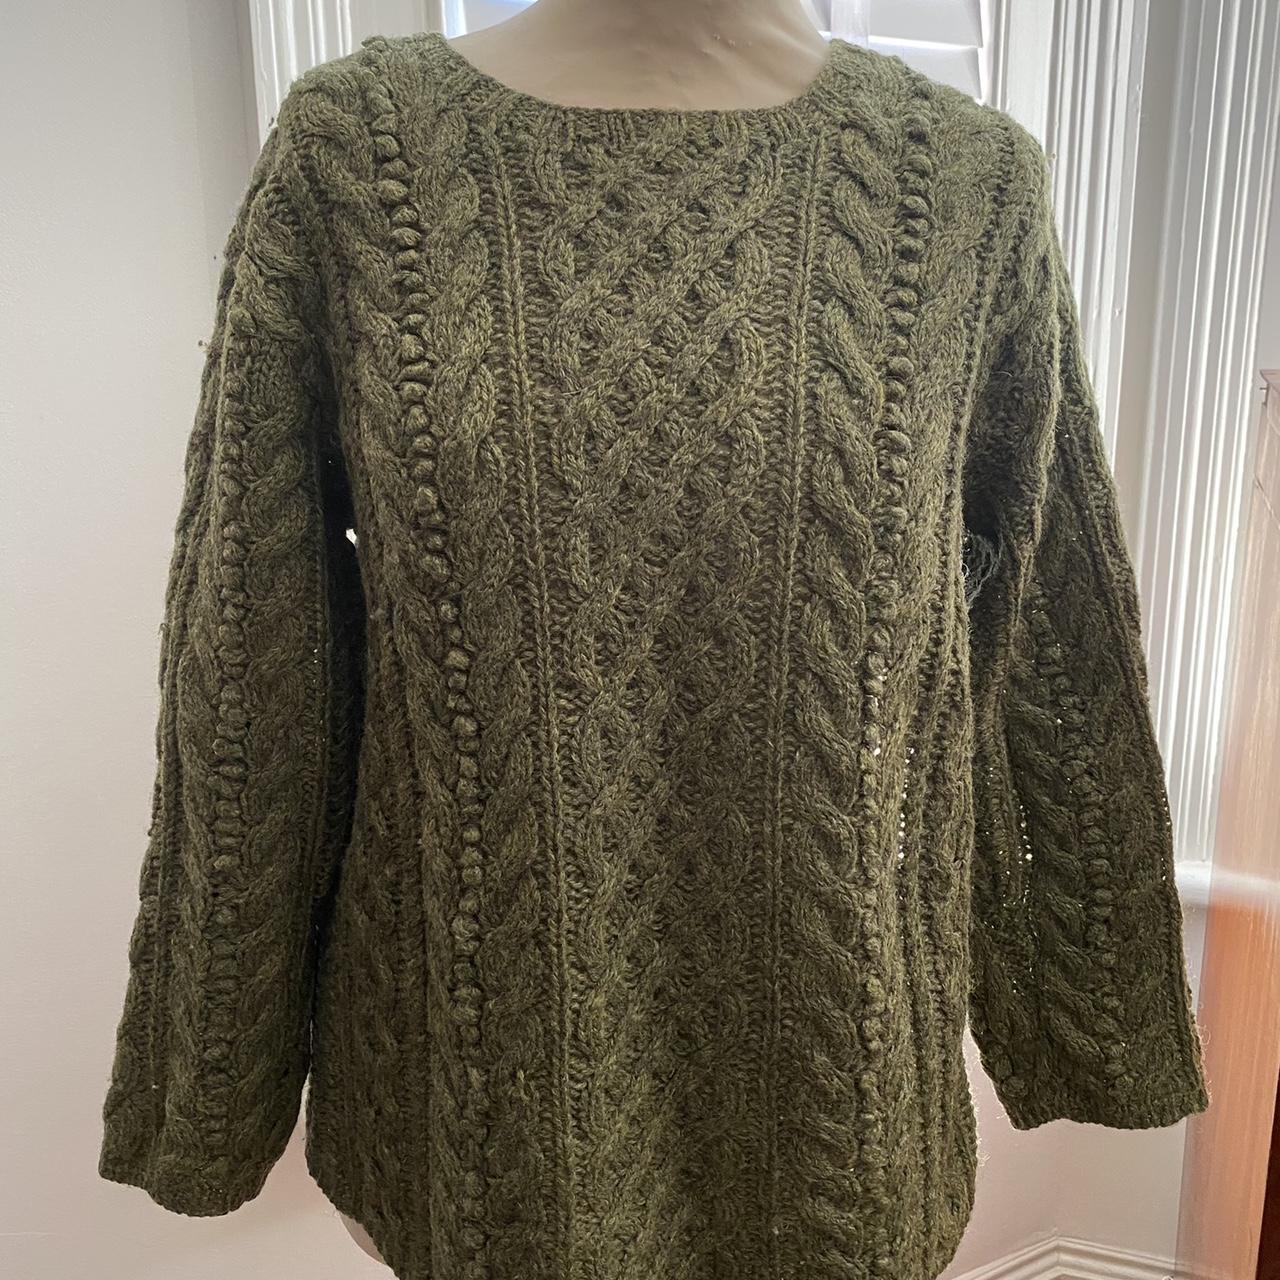 Vintage cable knit jumper, 100% wool. Beautiful marl... - Depop